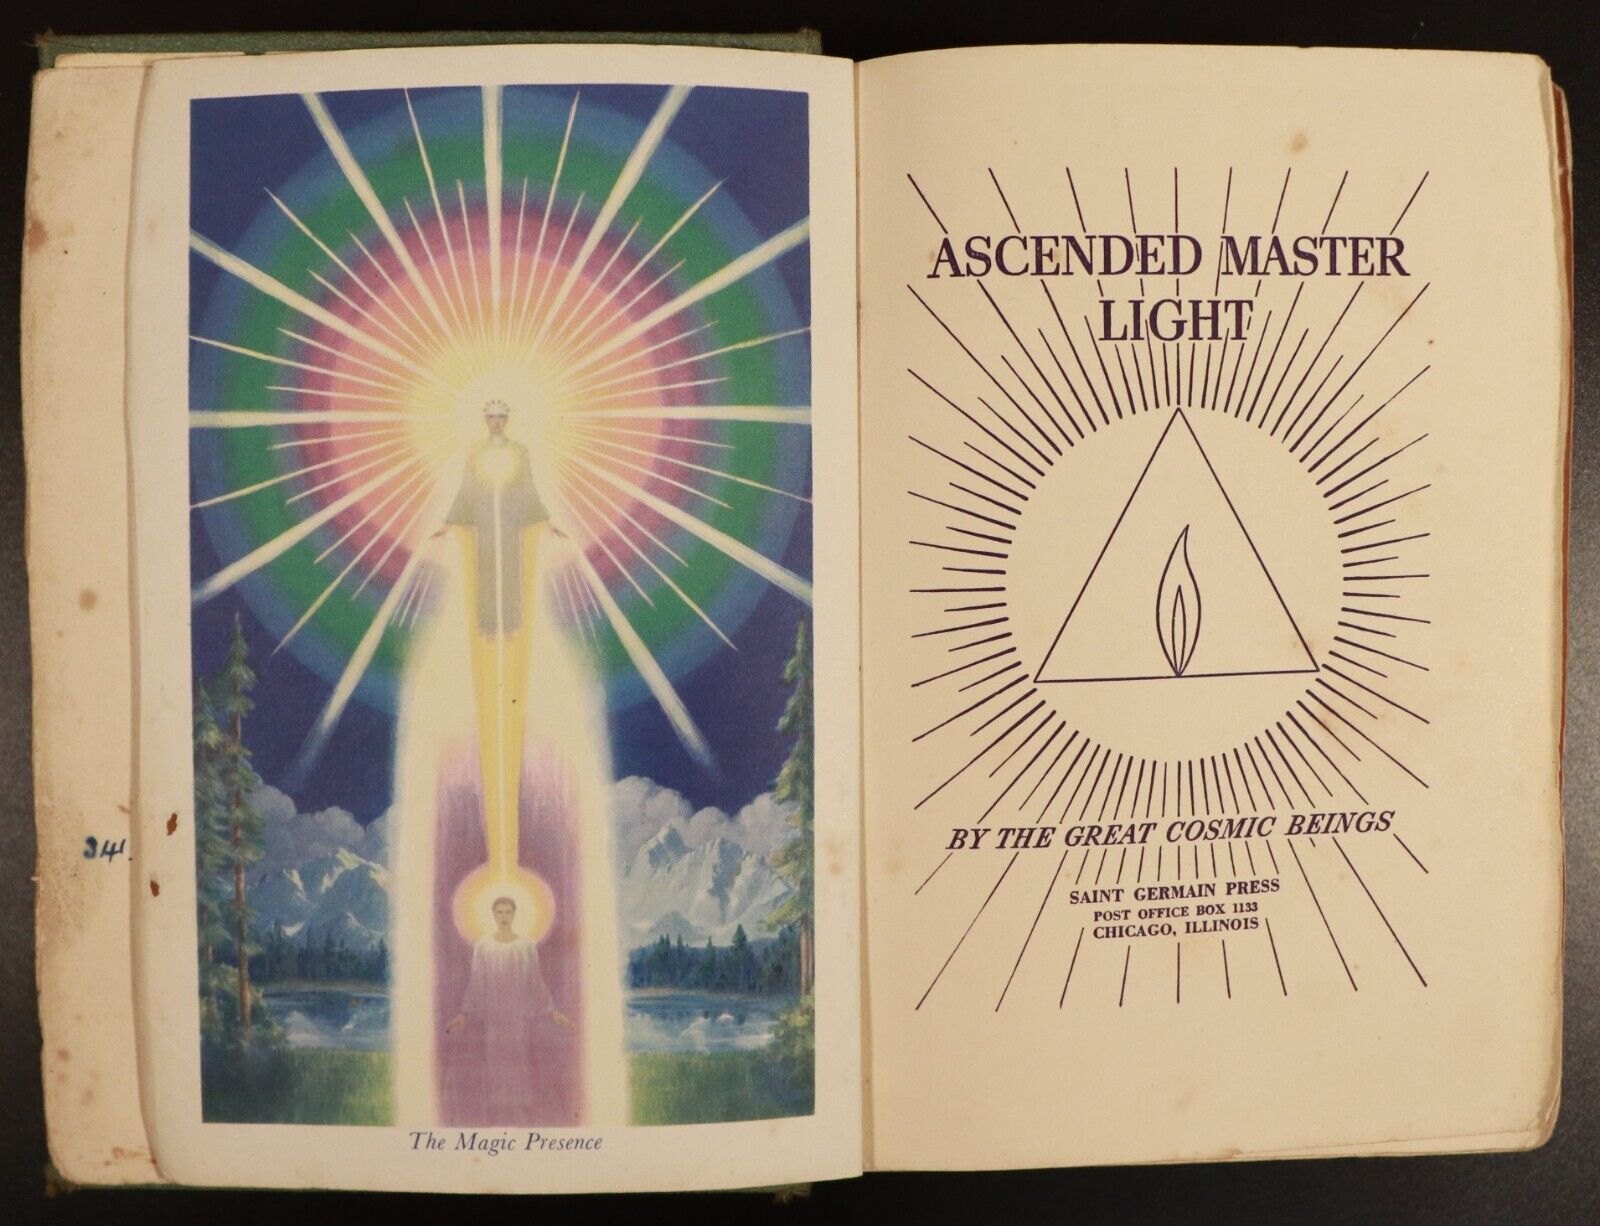 1935 4vol The Saint Germain Series Godfre' Ray King Antique Spirituality Books